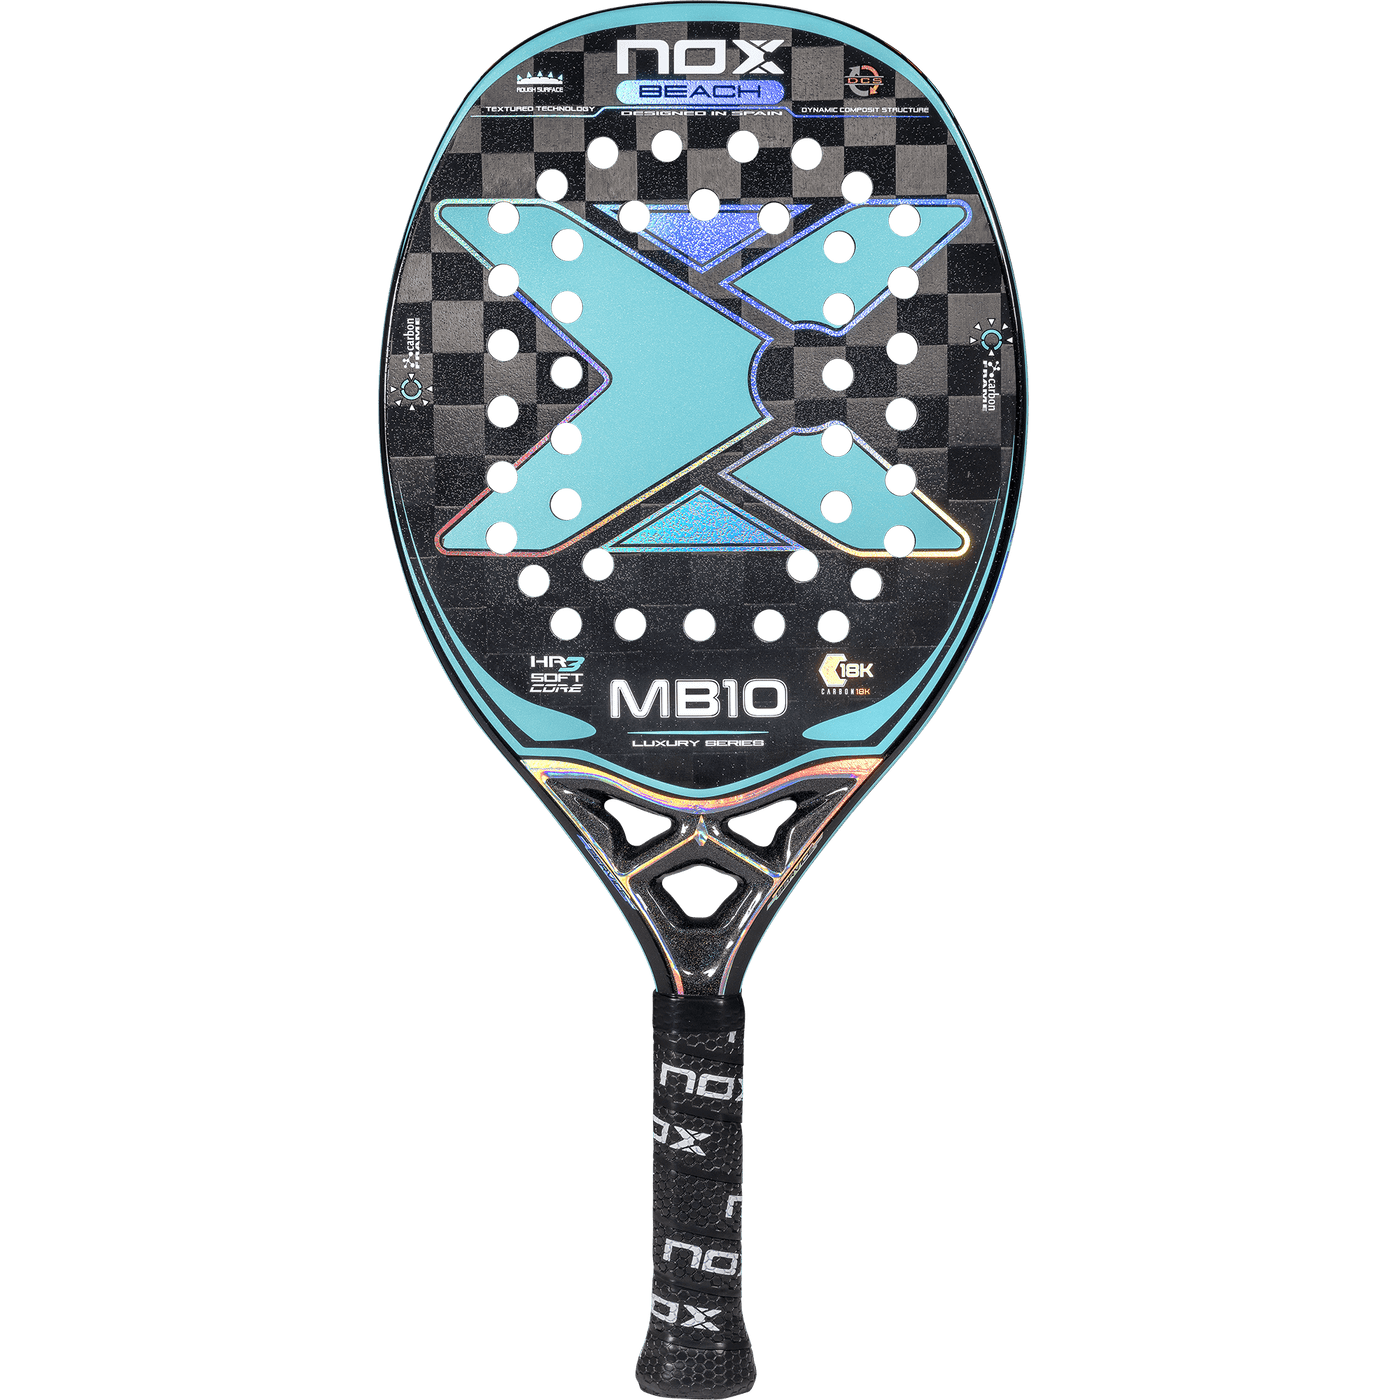 NOX MB10 Maraike Biglmaier Beach Tennis Racket